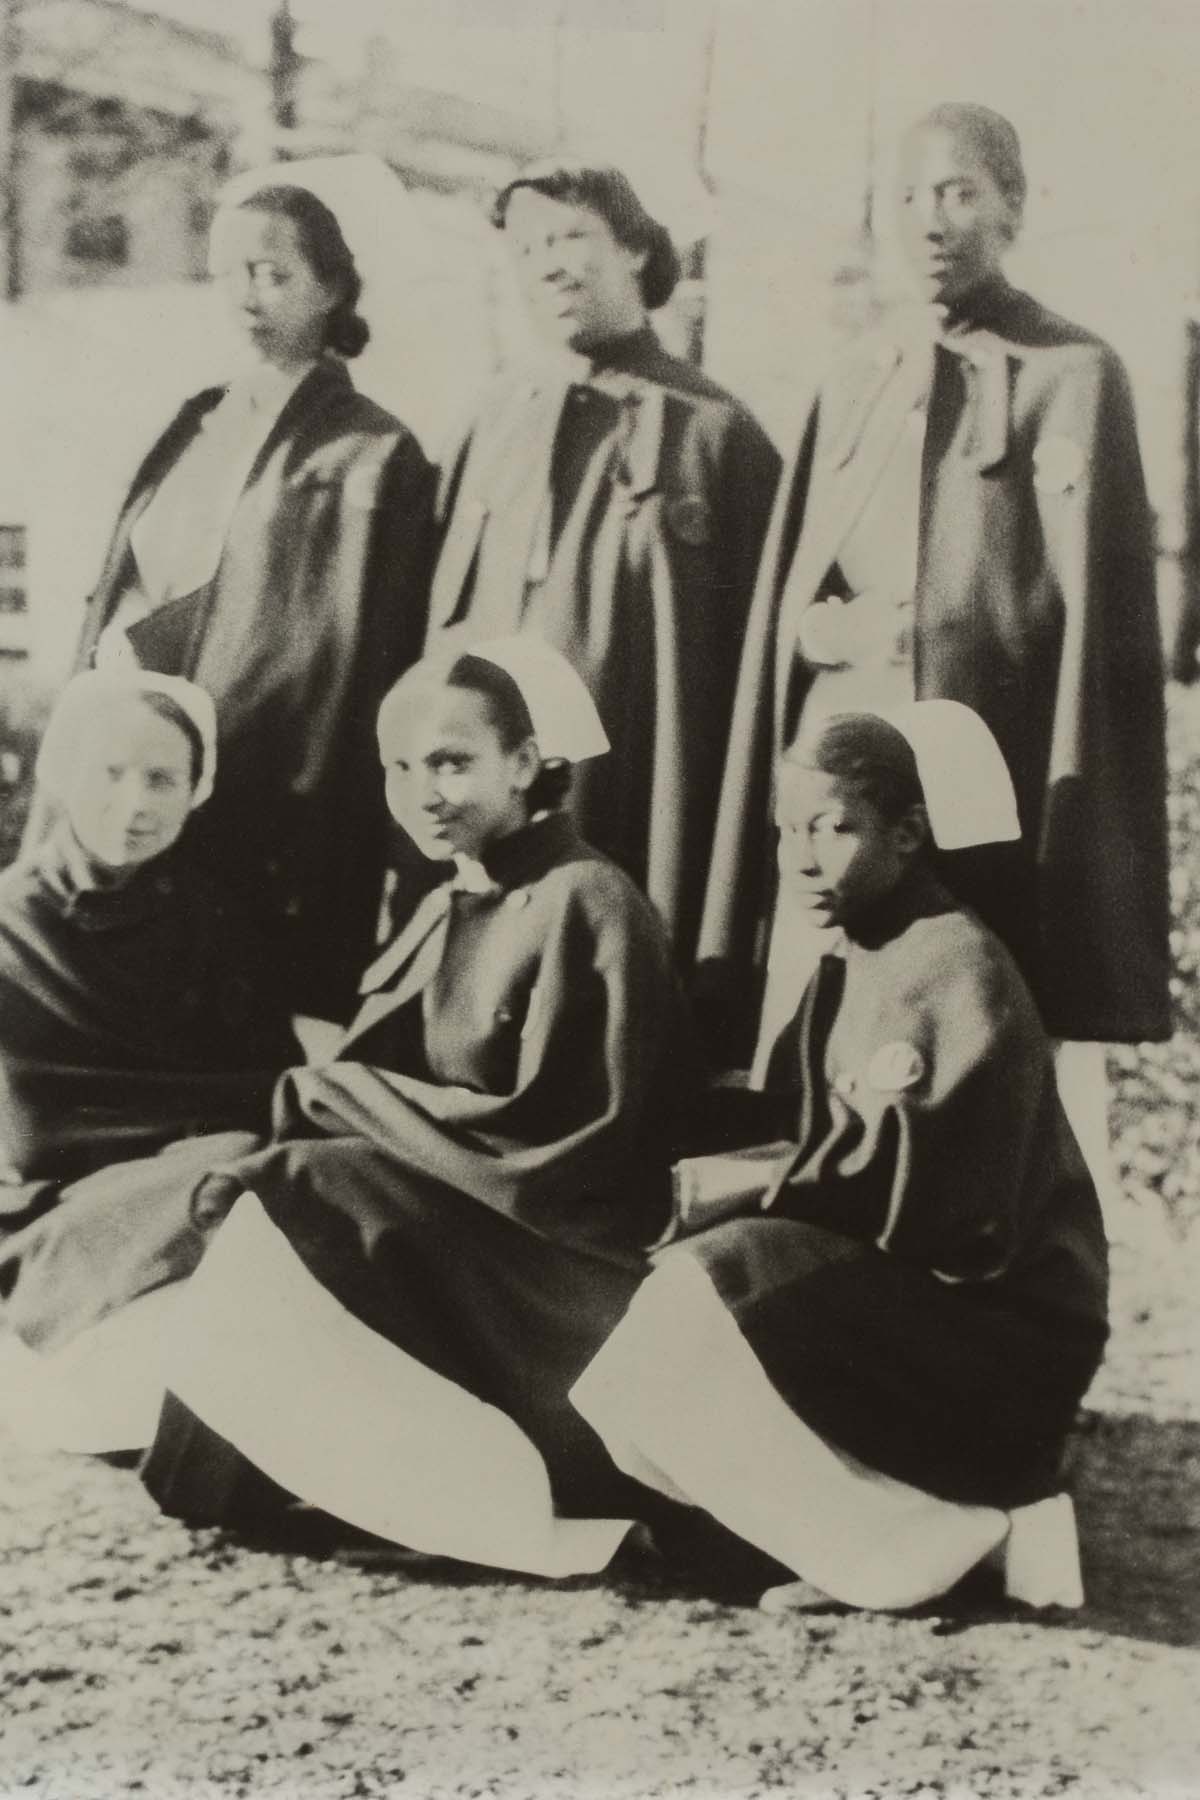 Six nurses in uniform